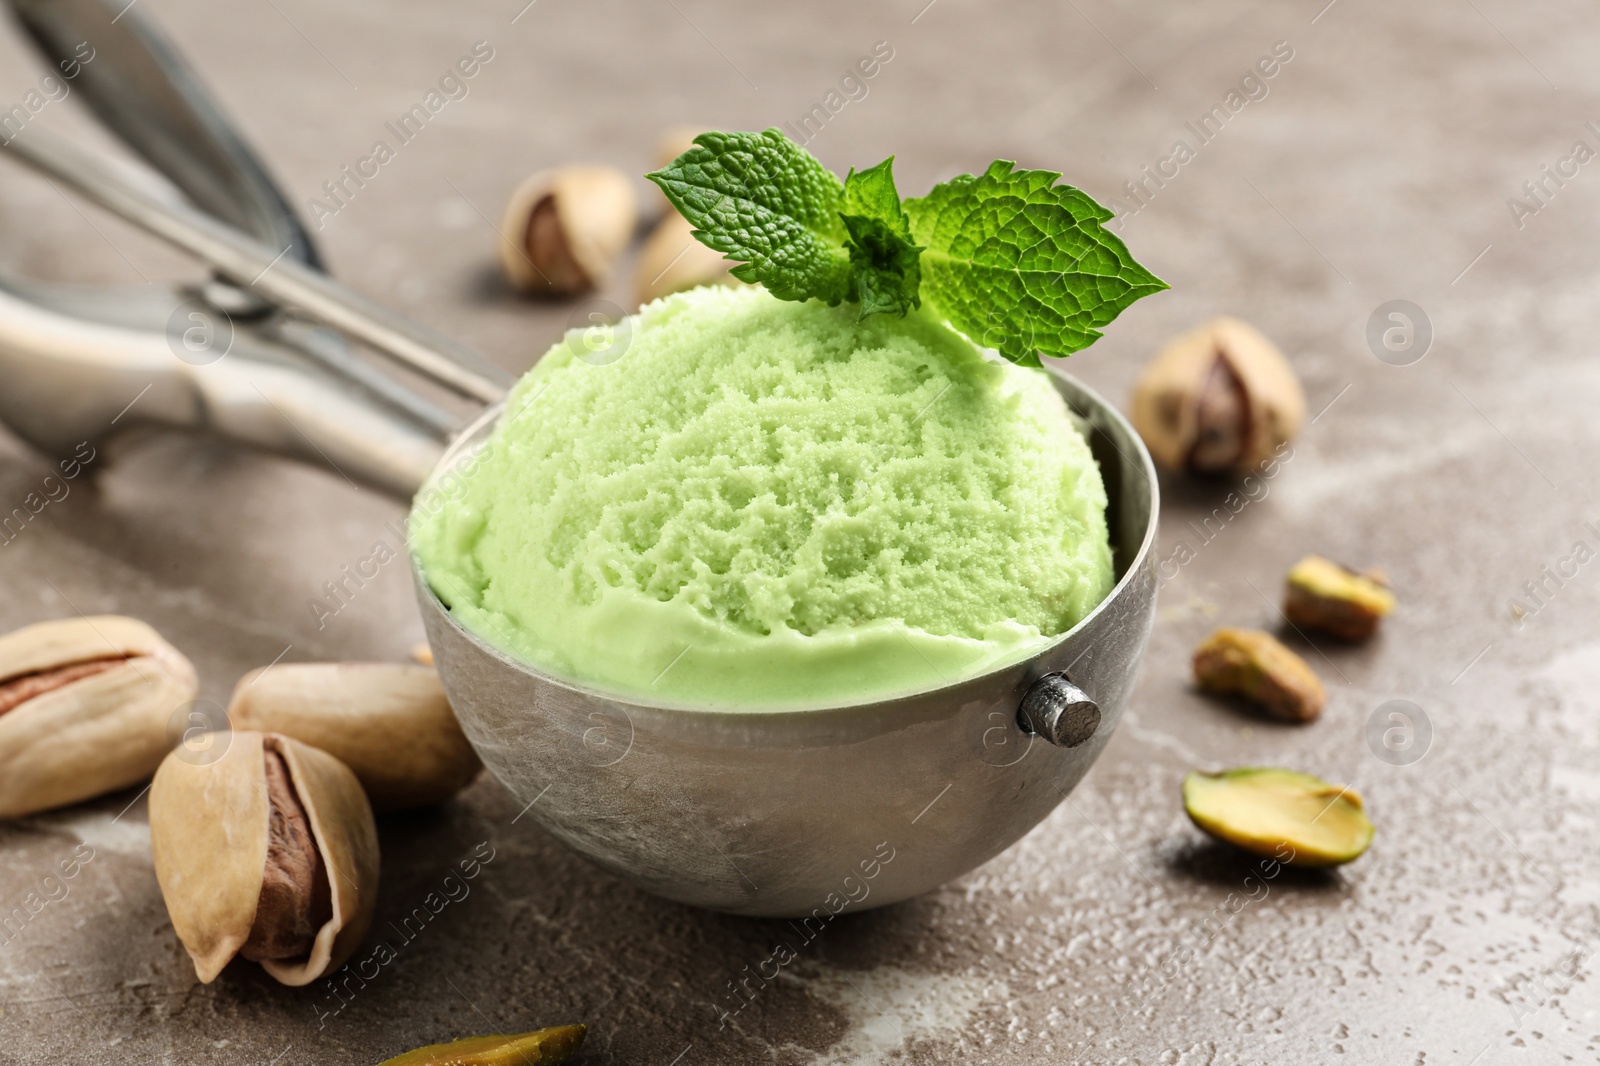 Photo of Scoop with tasty pistachio ice cream on grey table, closeup view